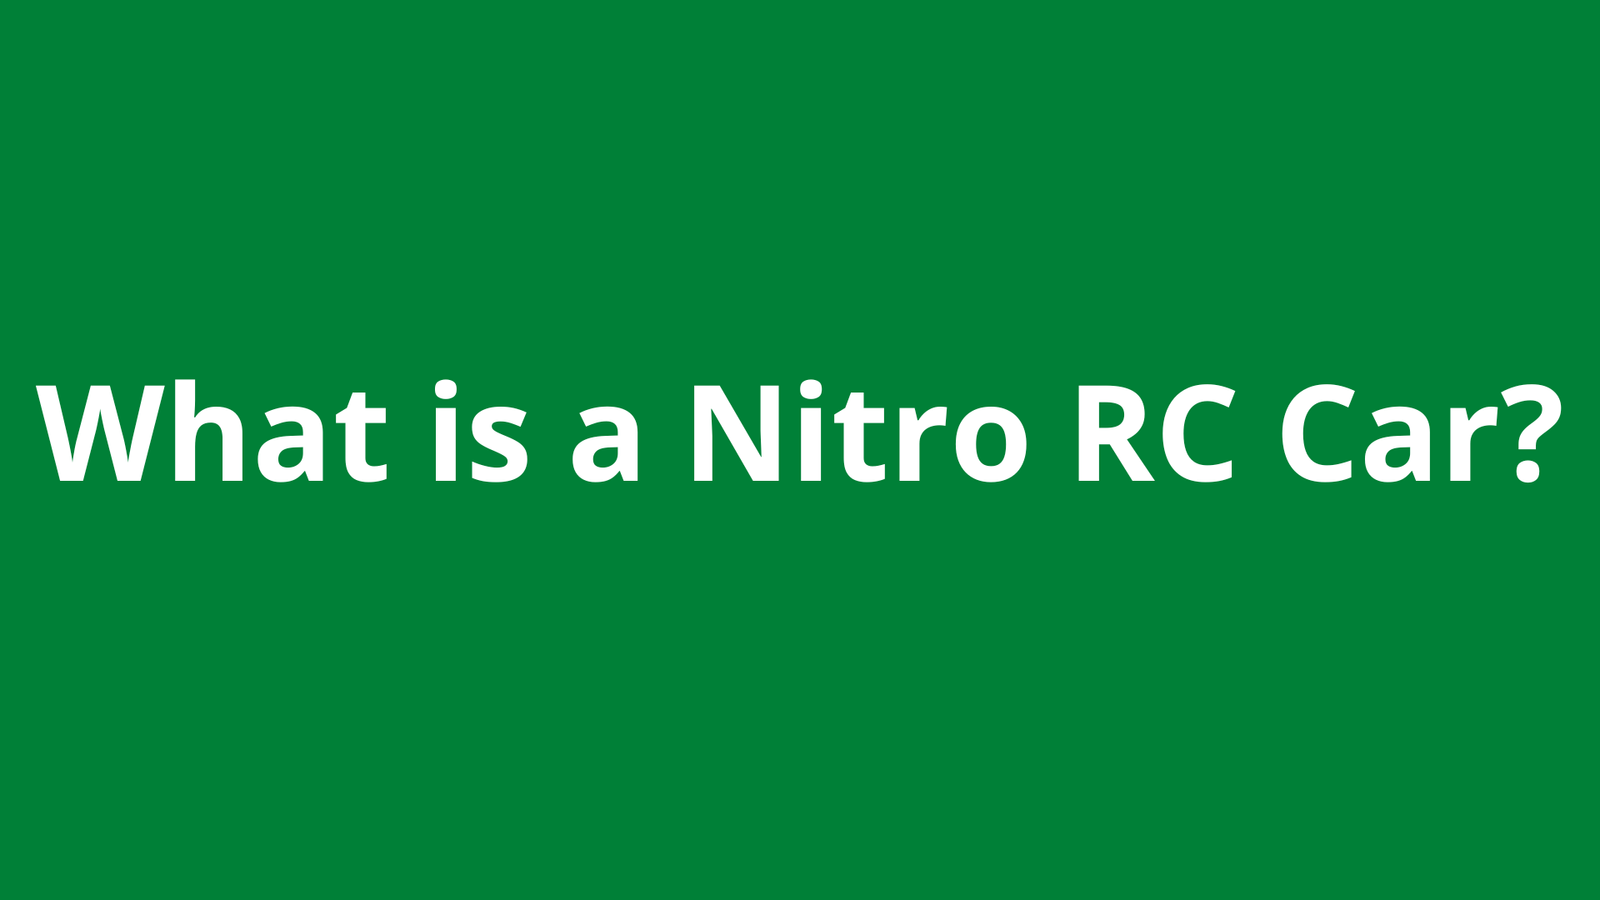 What is a Nitro RC Car